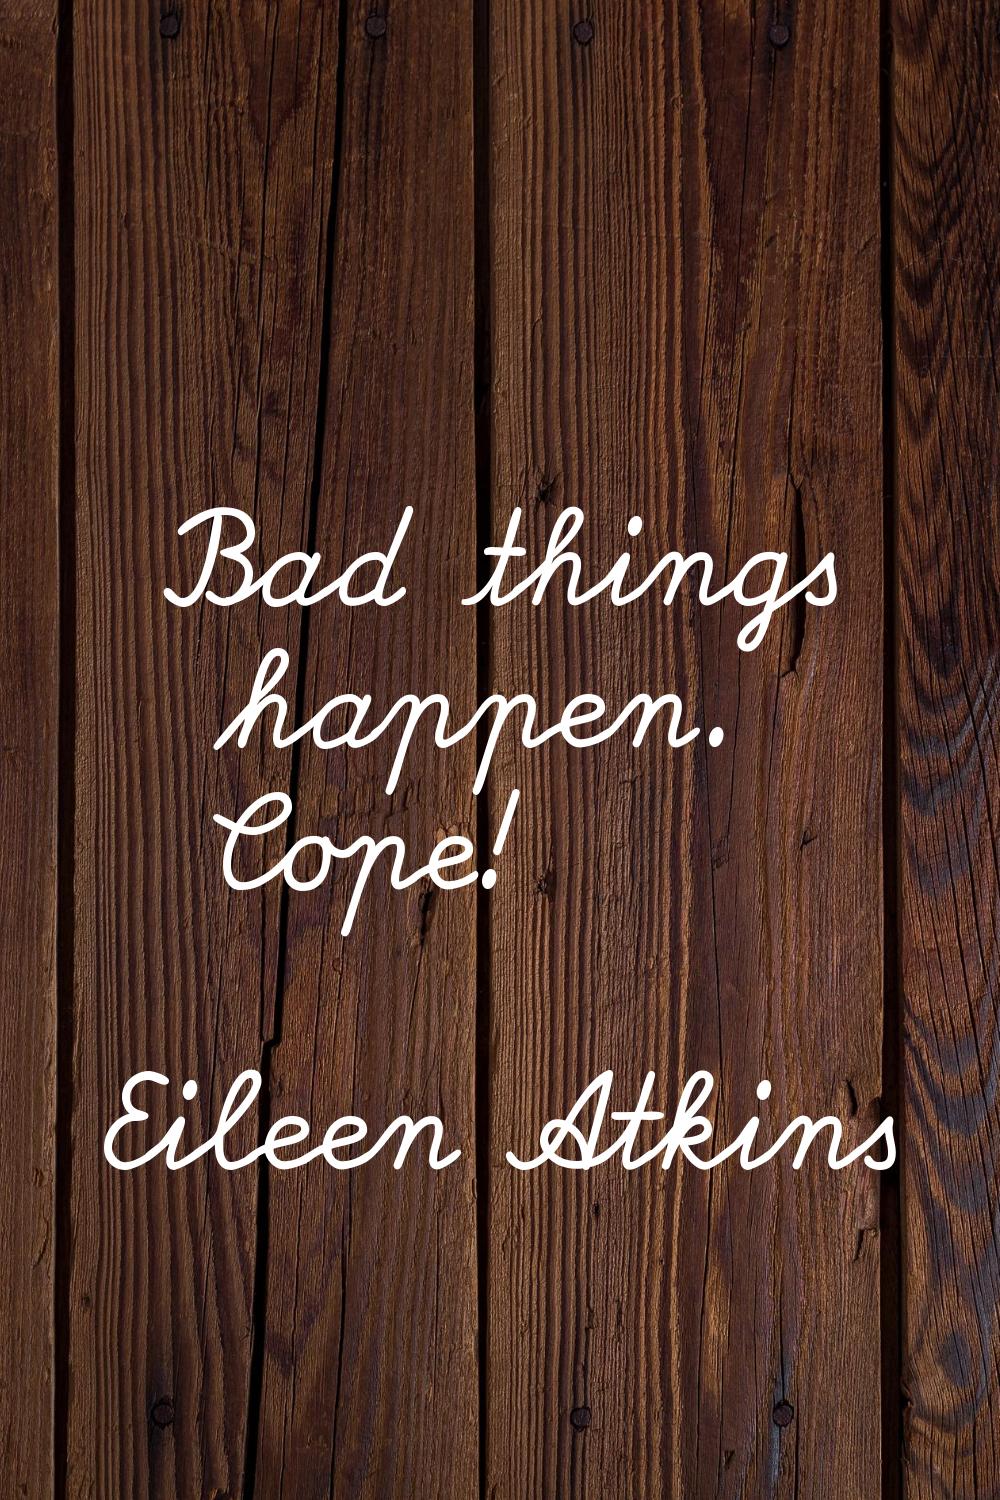 Bad things happen. Cope!